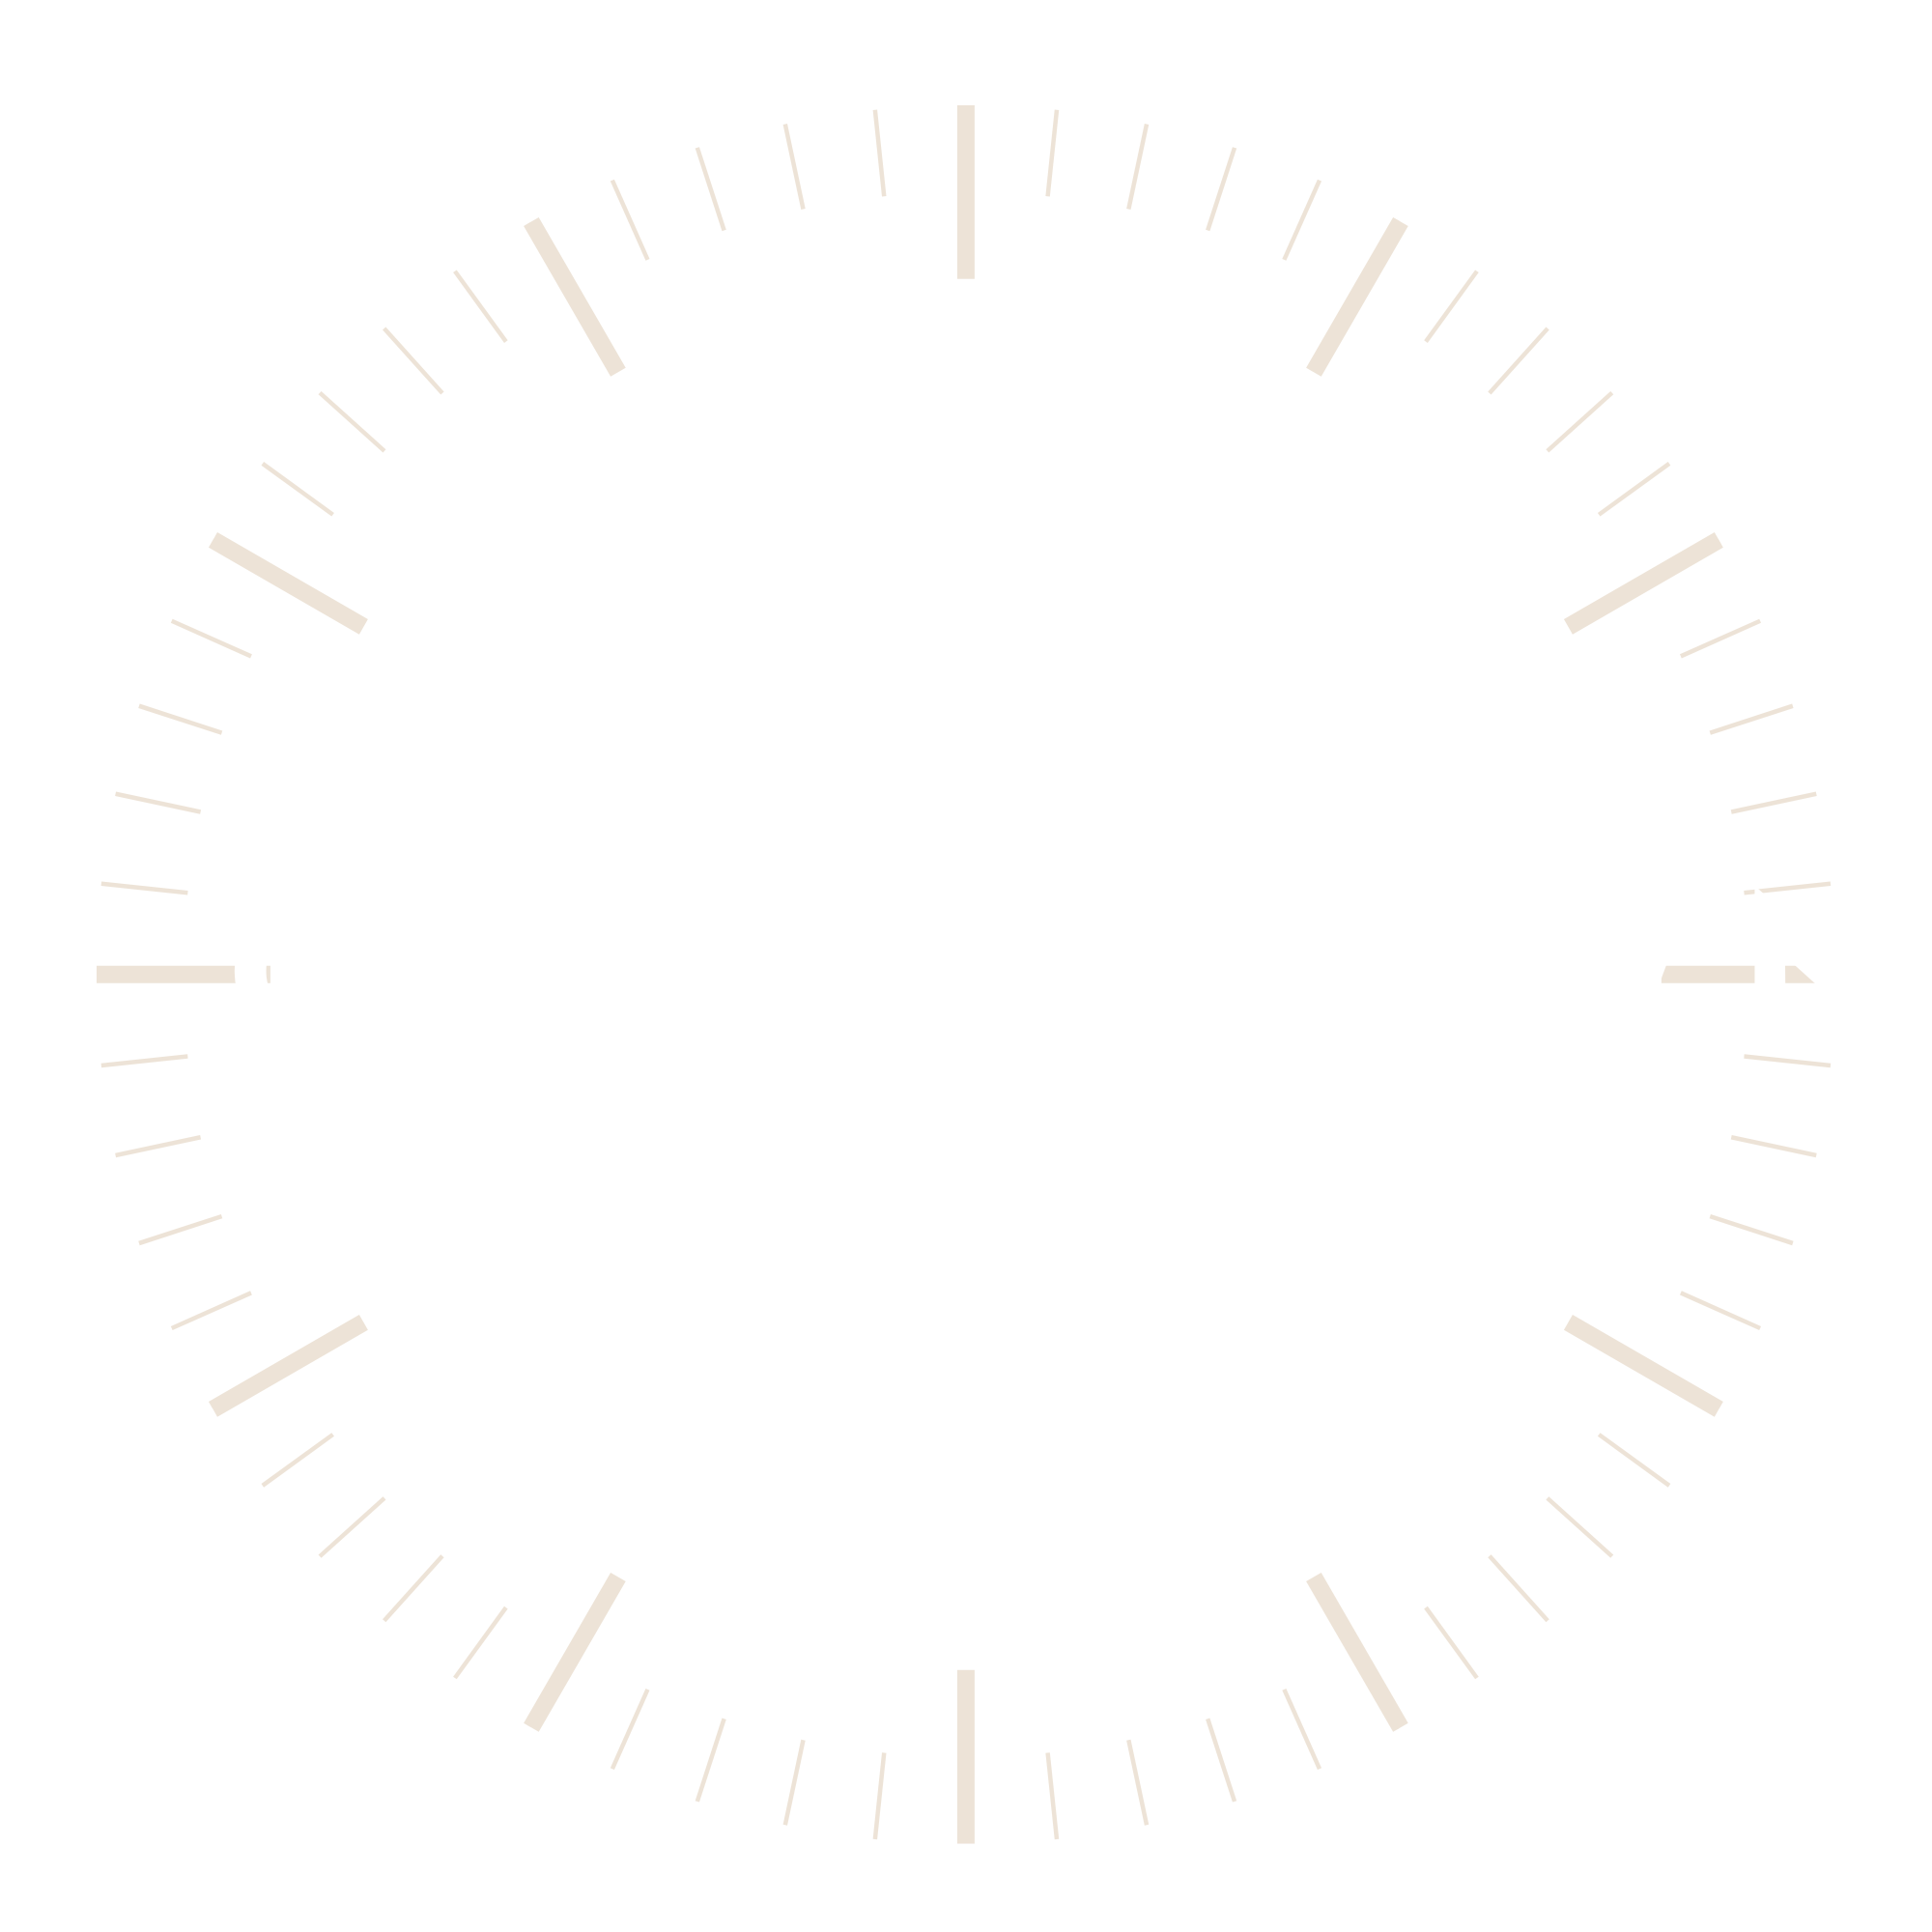 Countdown Revival Ministries